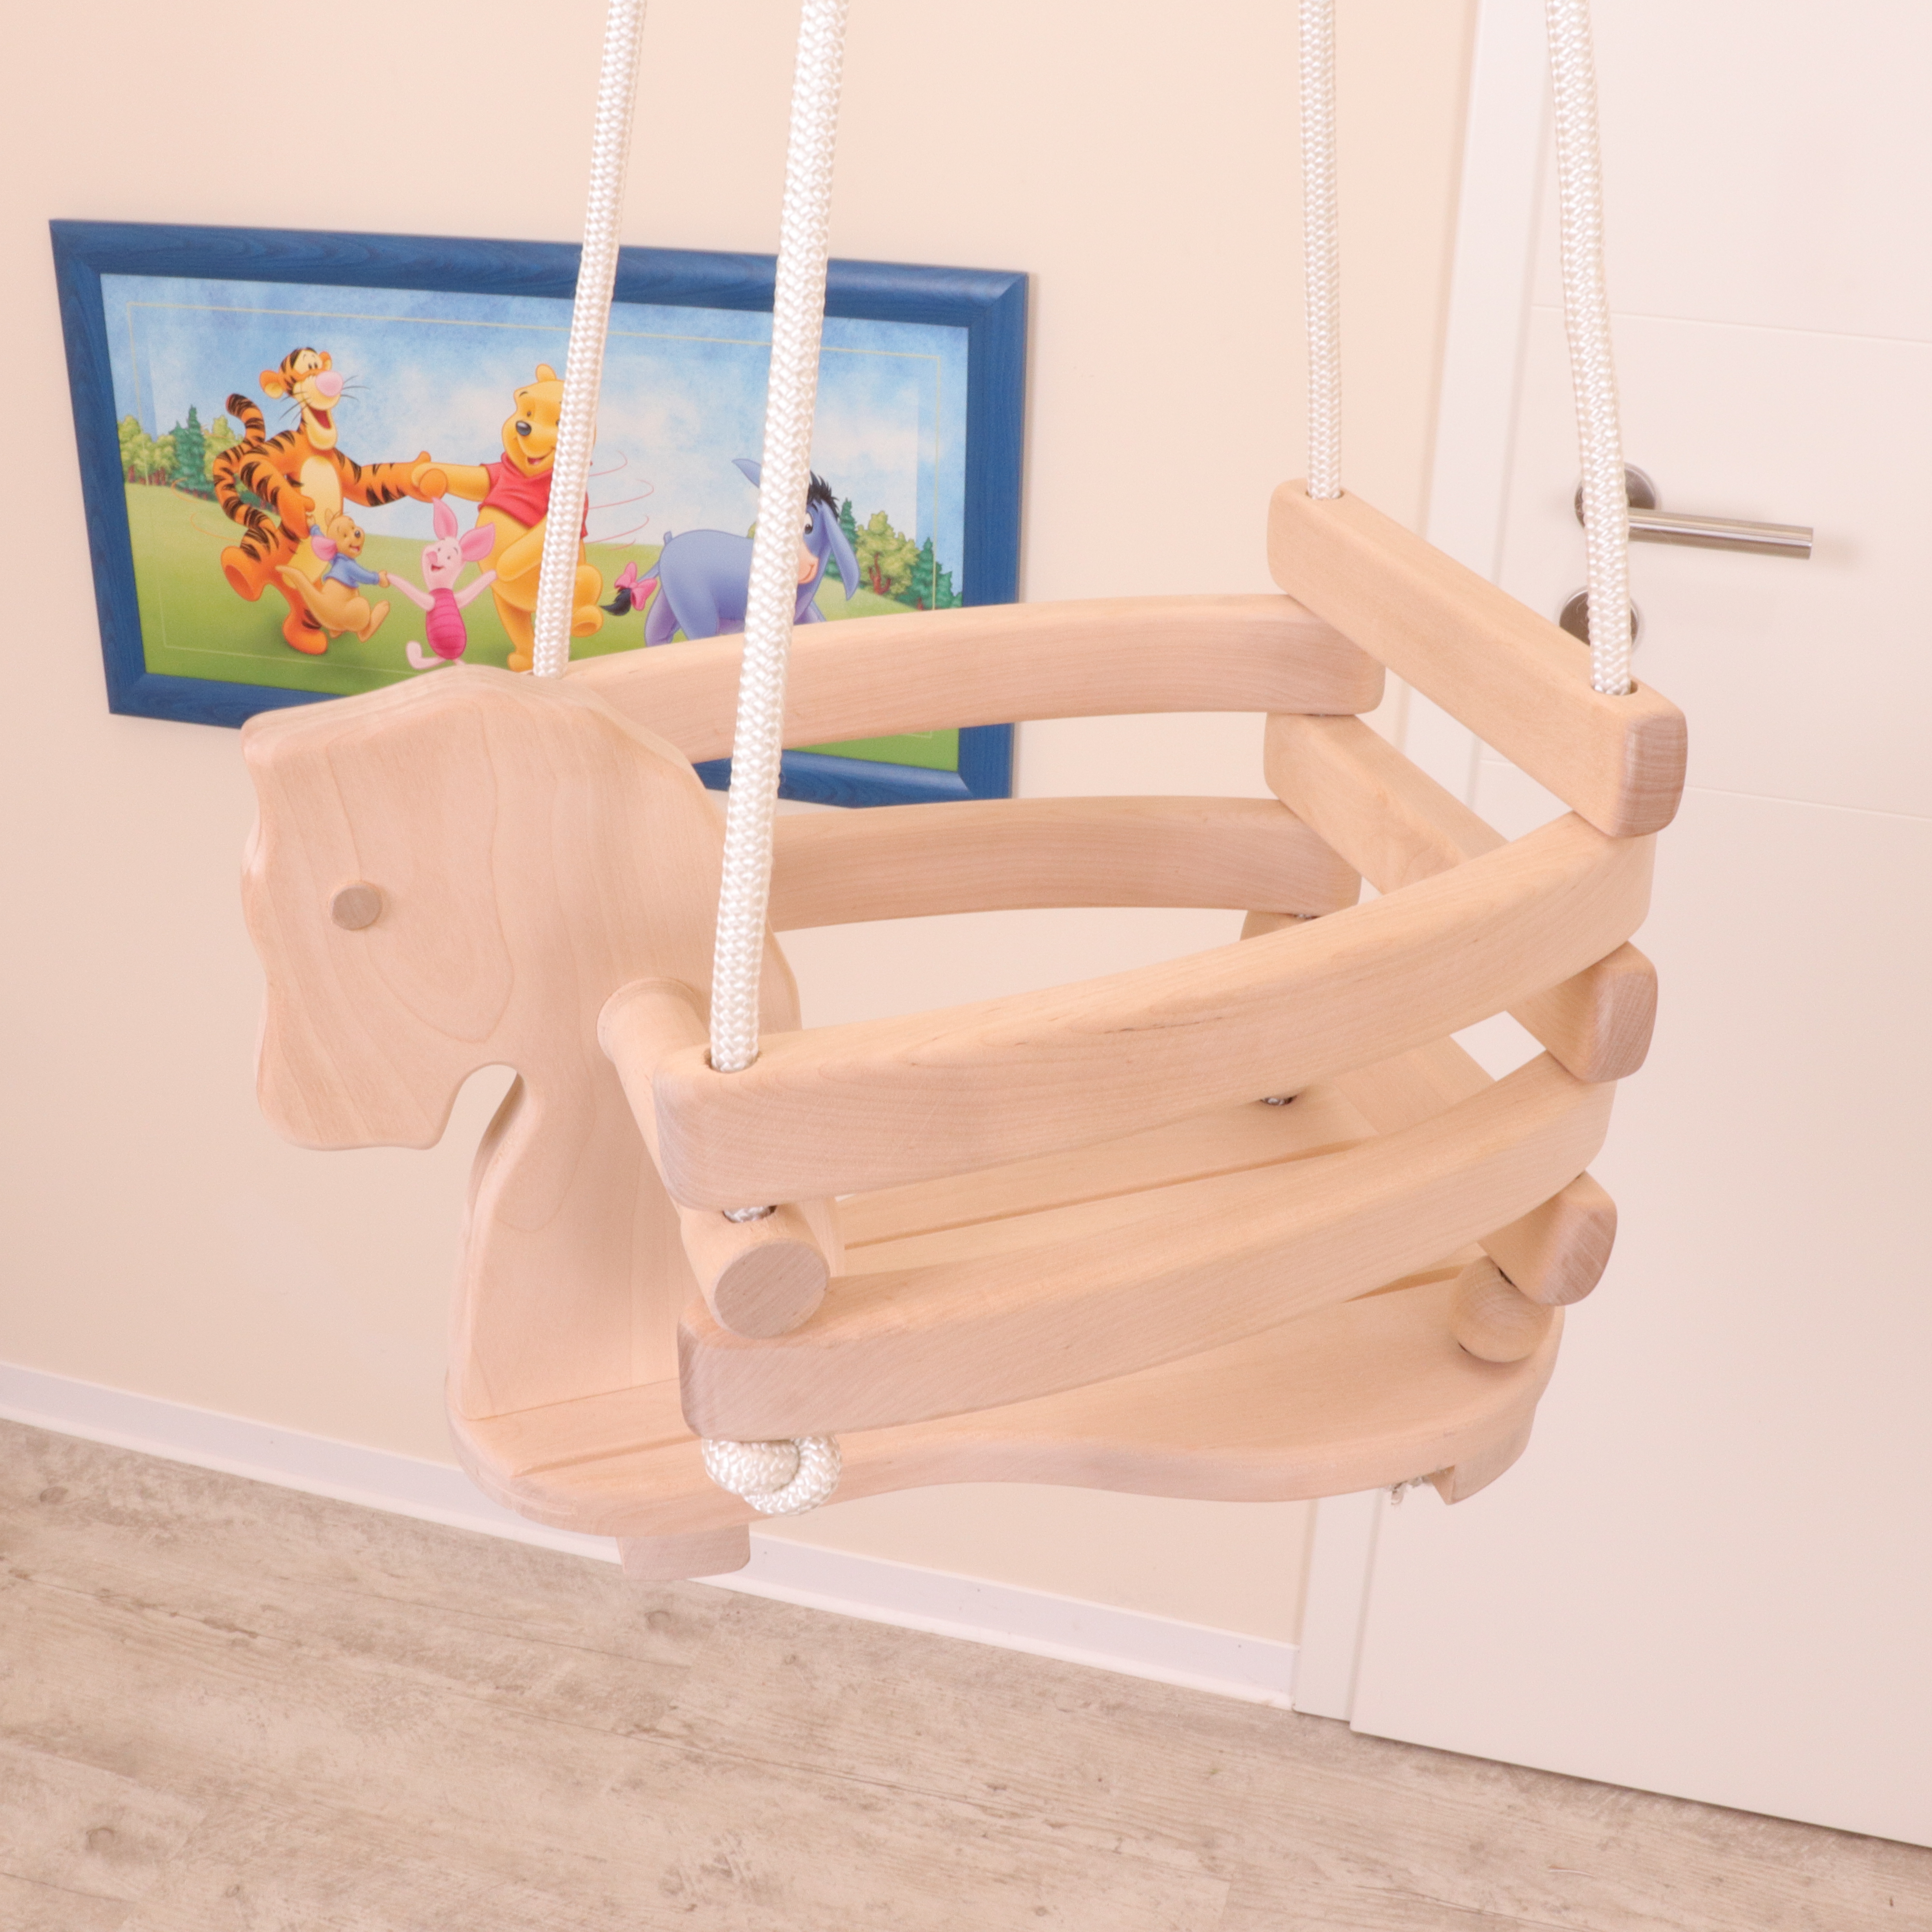 Schaukel Babyschaukel de luxe natur Gitterschaukel Holz Kleinkinder Spielzeug 